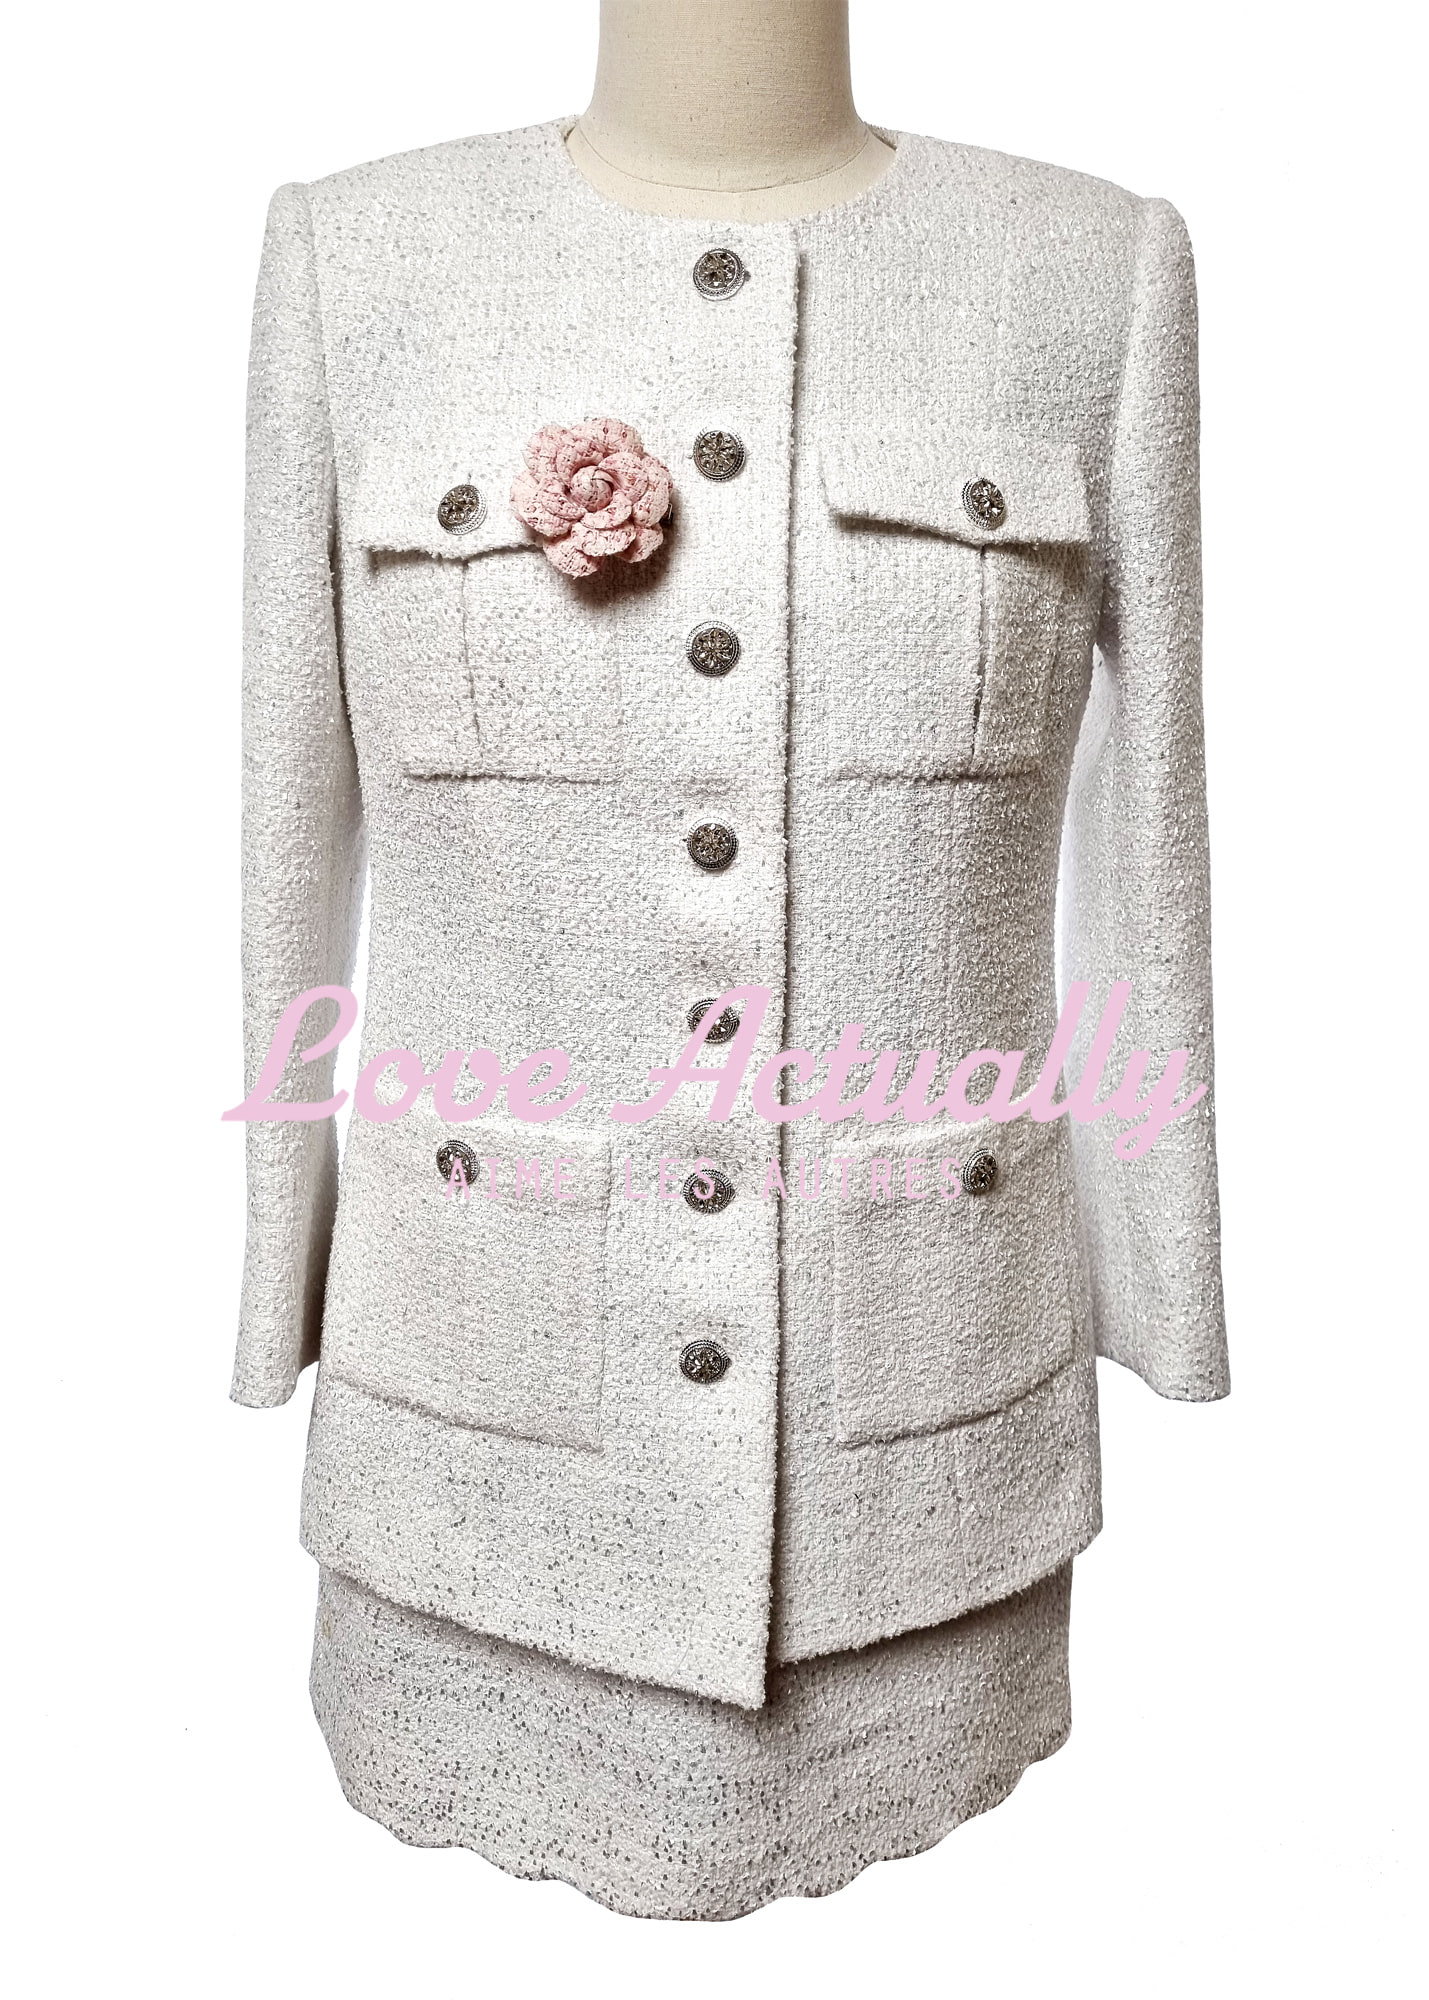 Flower Breeze  Tweed Jacket 꽃바람 트위드자켓, 흰색